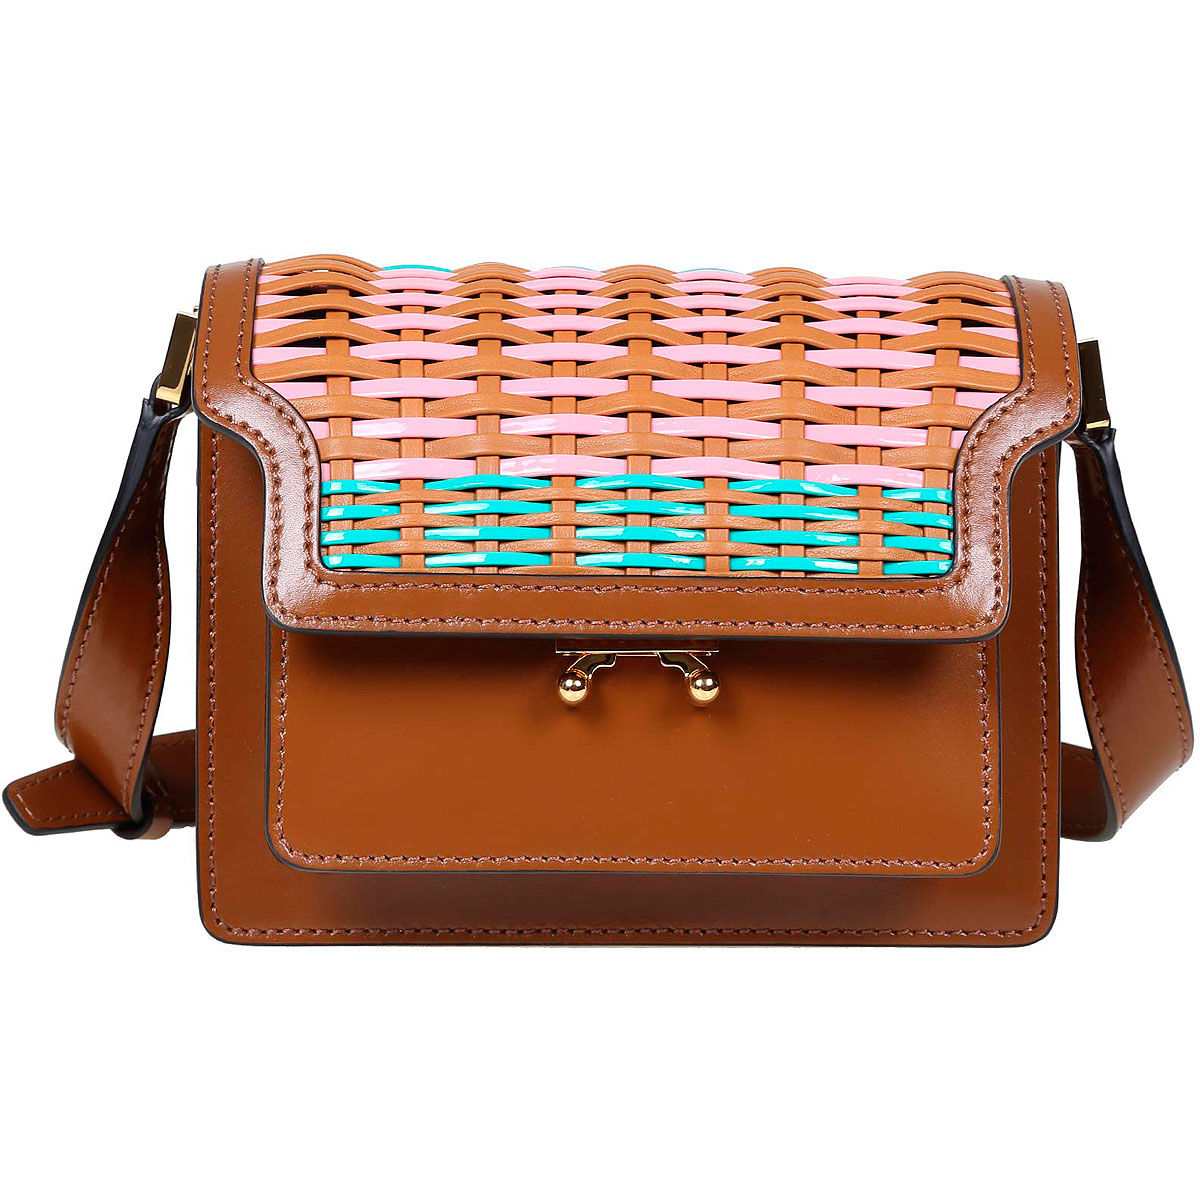 Handbags Marni, Style code: sbmp0075l1-p4692-z514m